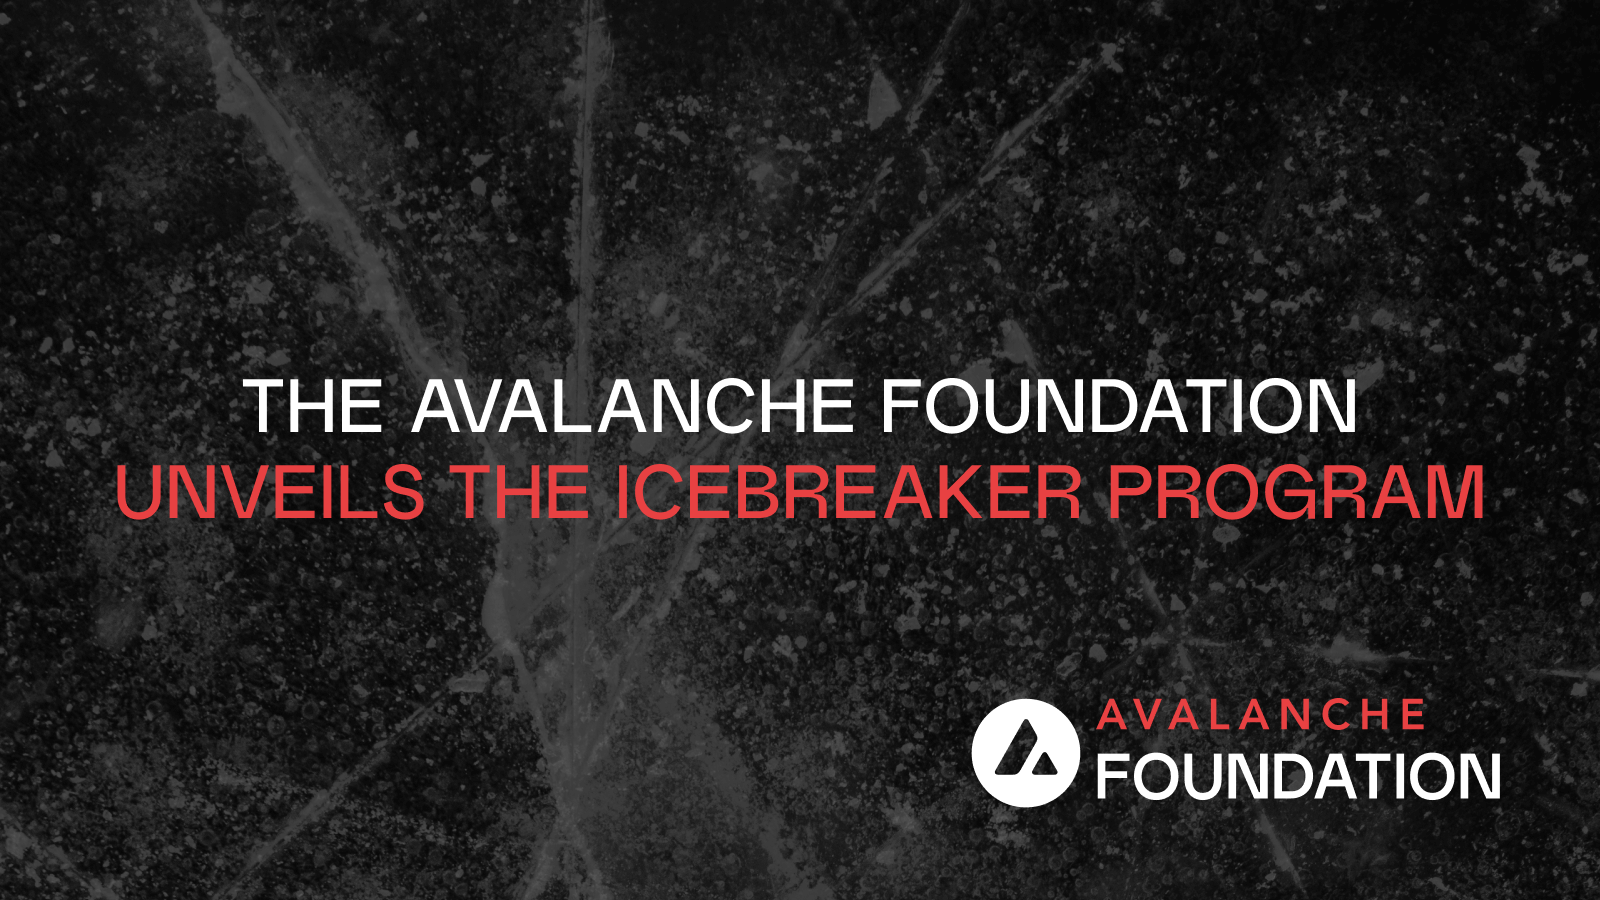 The Avalanche Foundation's Icebreaker Program